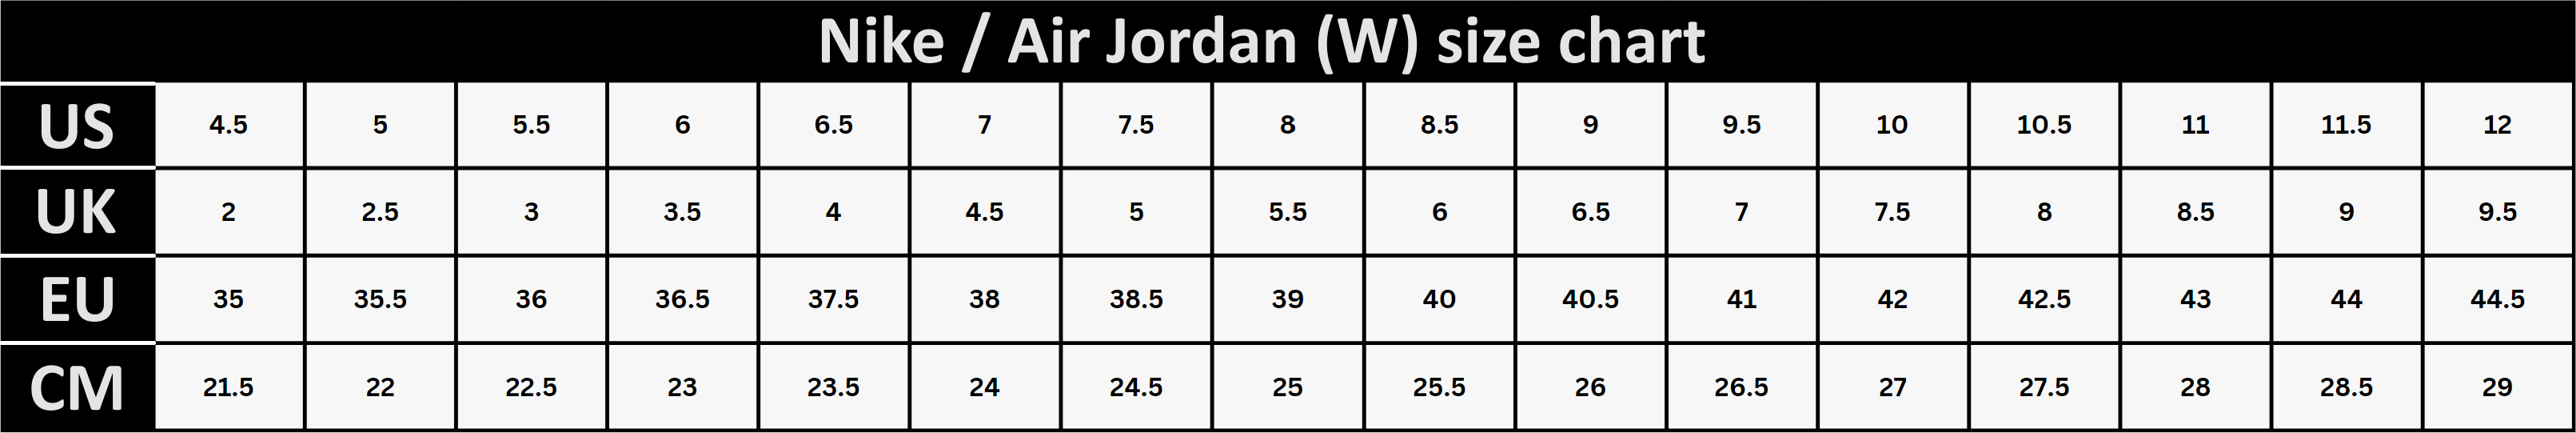 Air Jordan Nike - size chart W